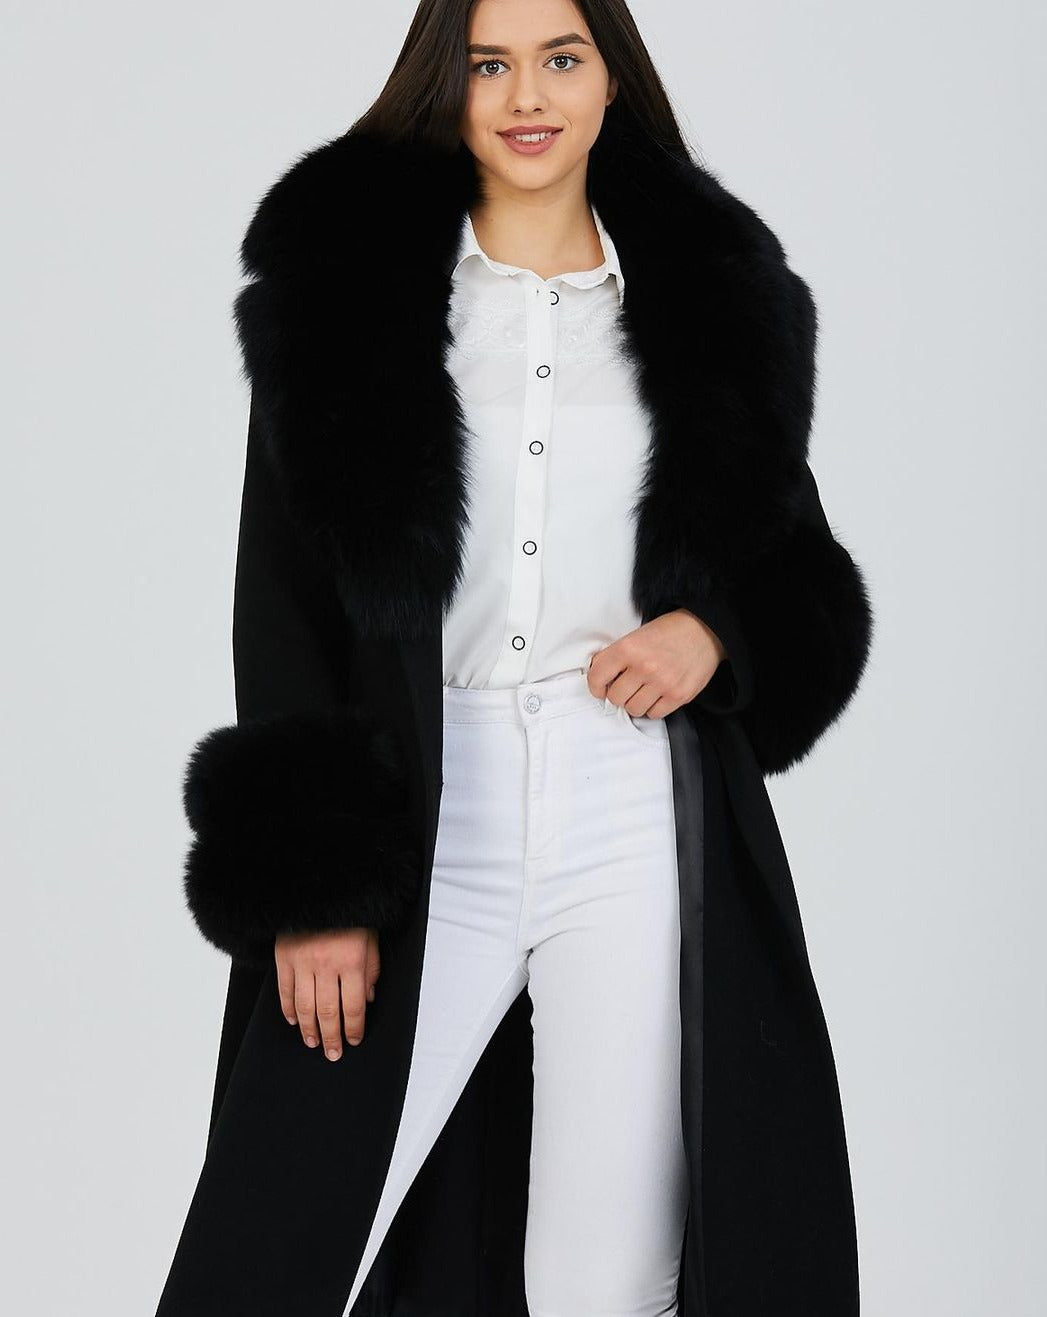 Versatile and Luxurious GLORIA BLACK Cashmere Wool Coat